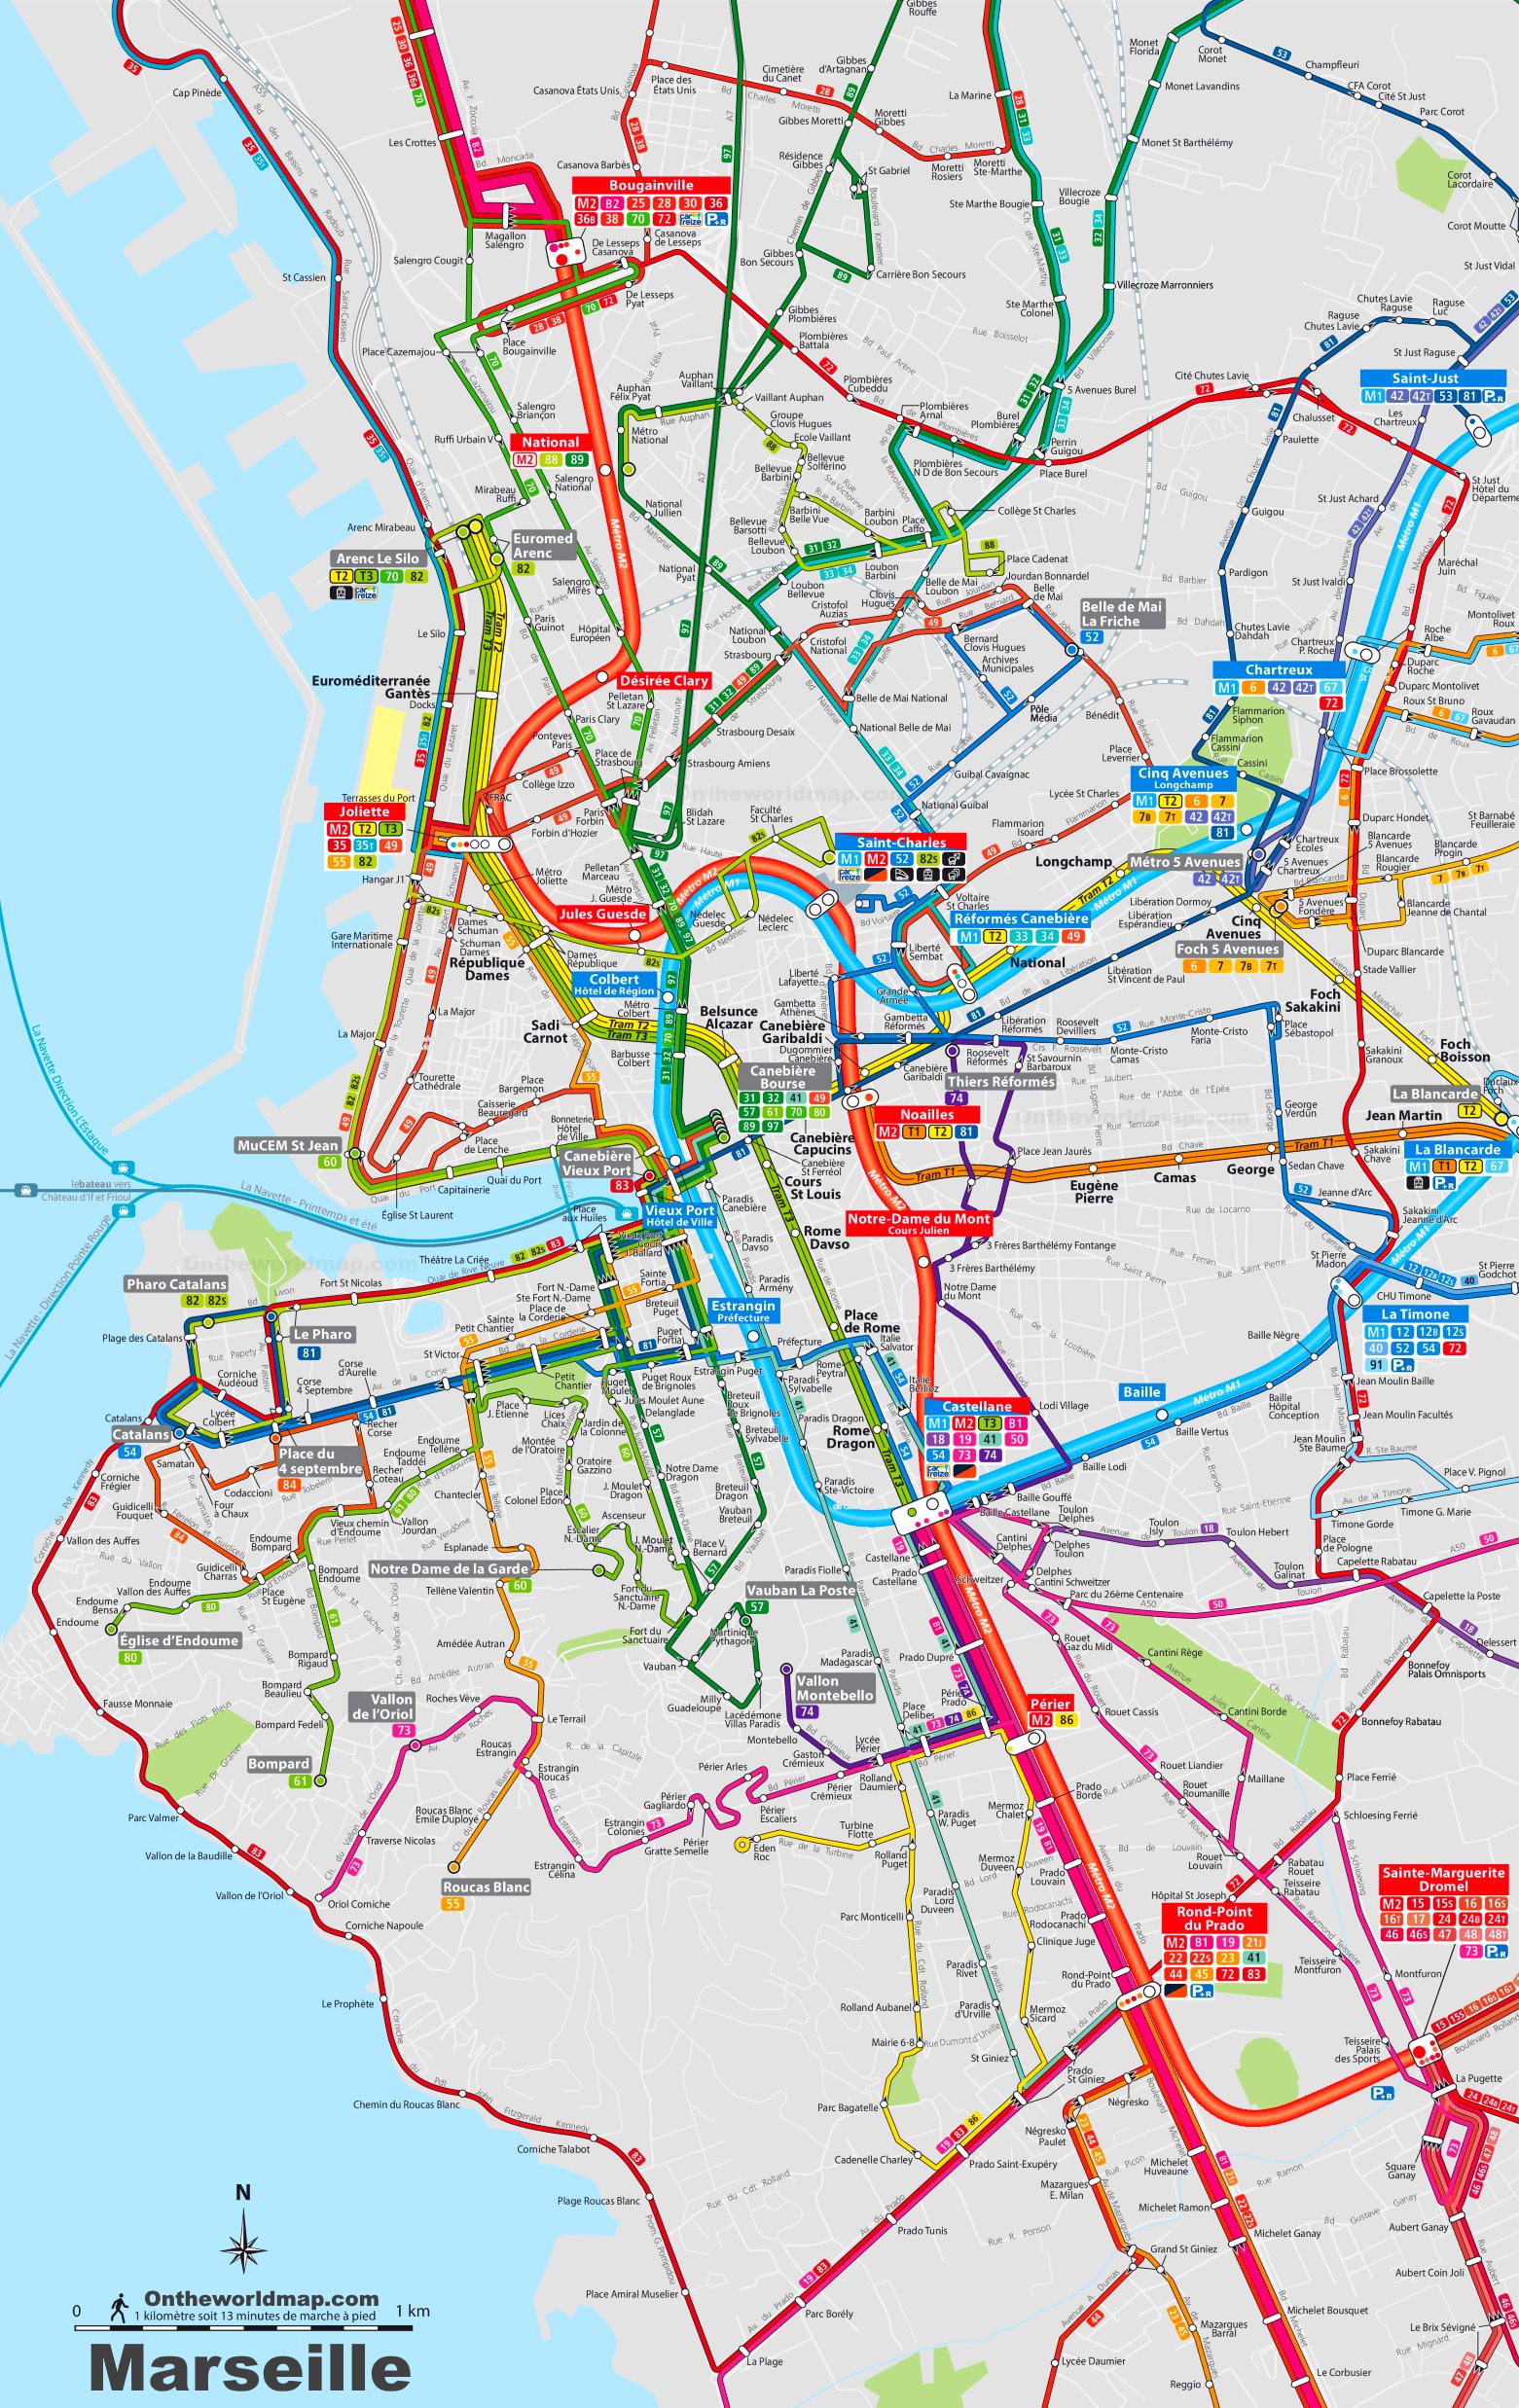 Marseille city center transport map